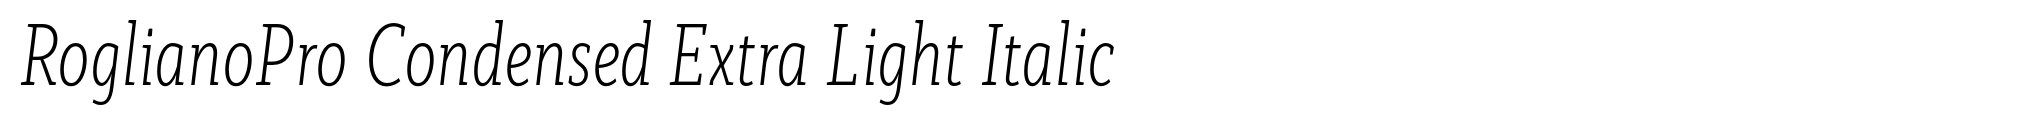 RoglianoPro Condensed Extra Light Italic image